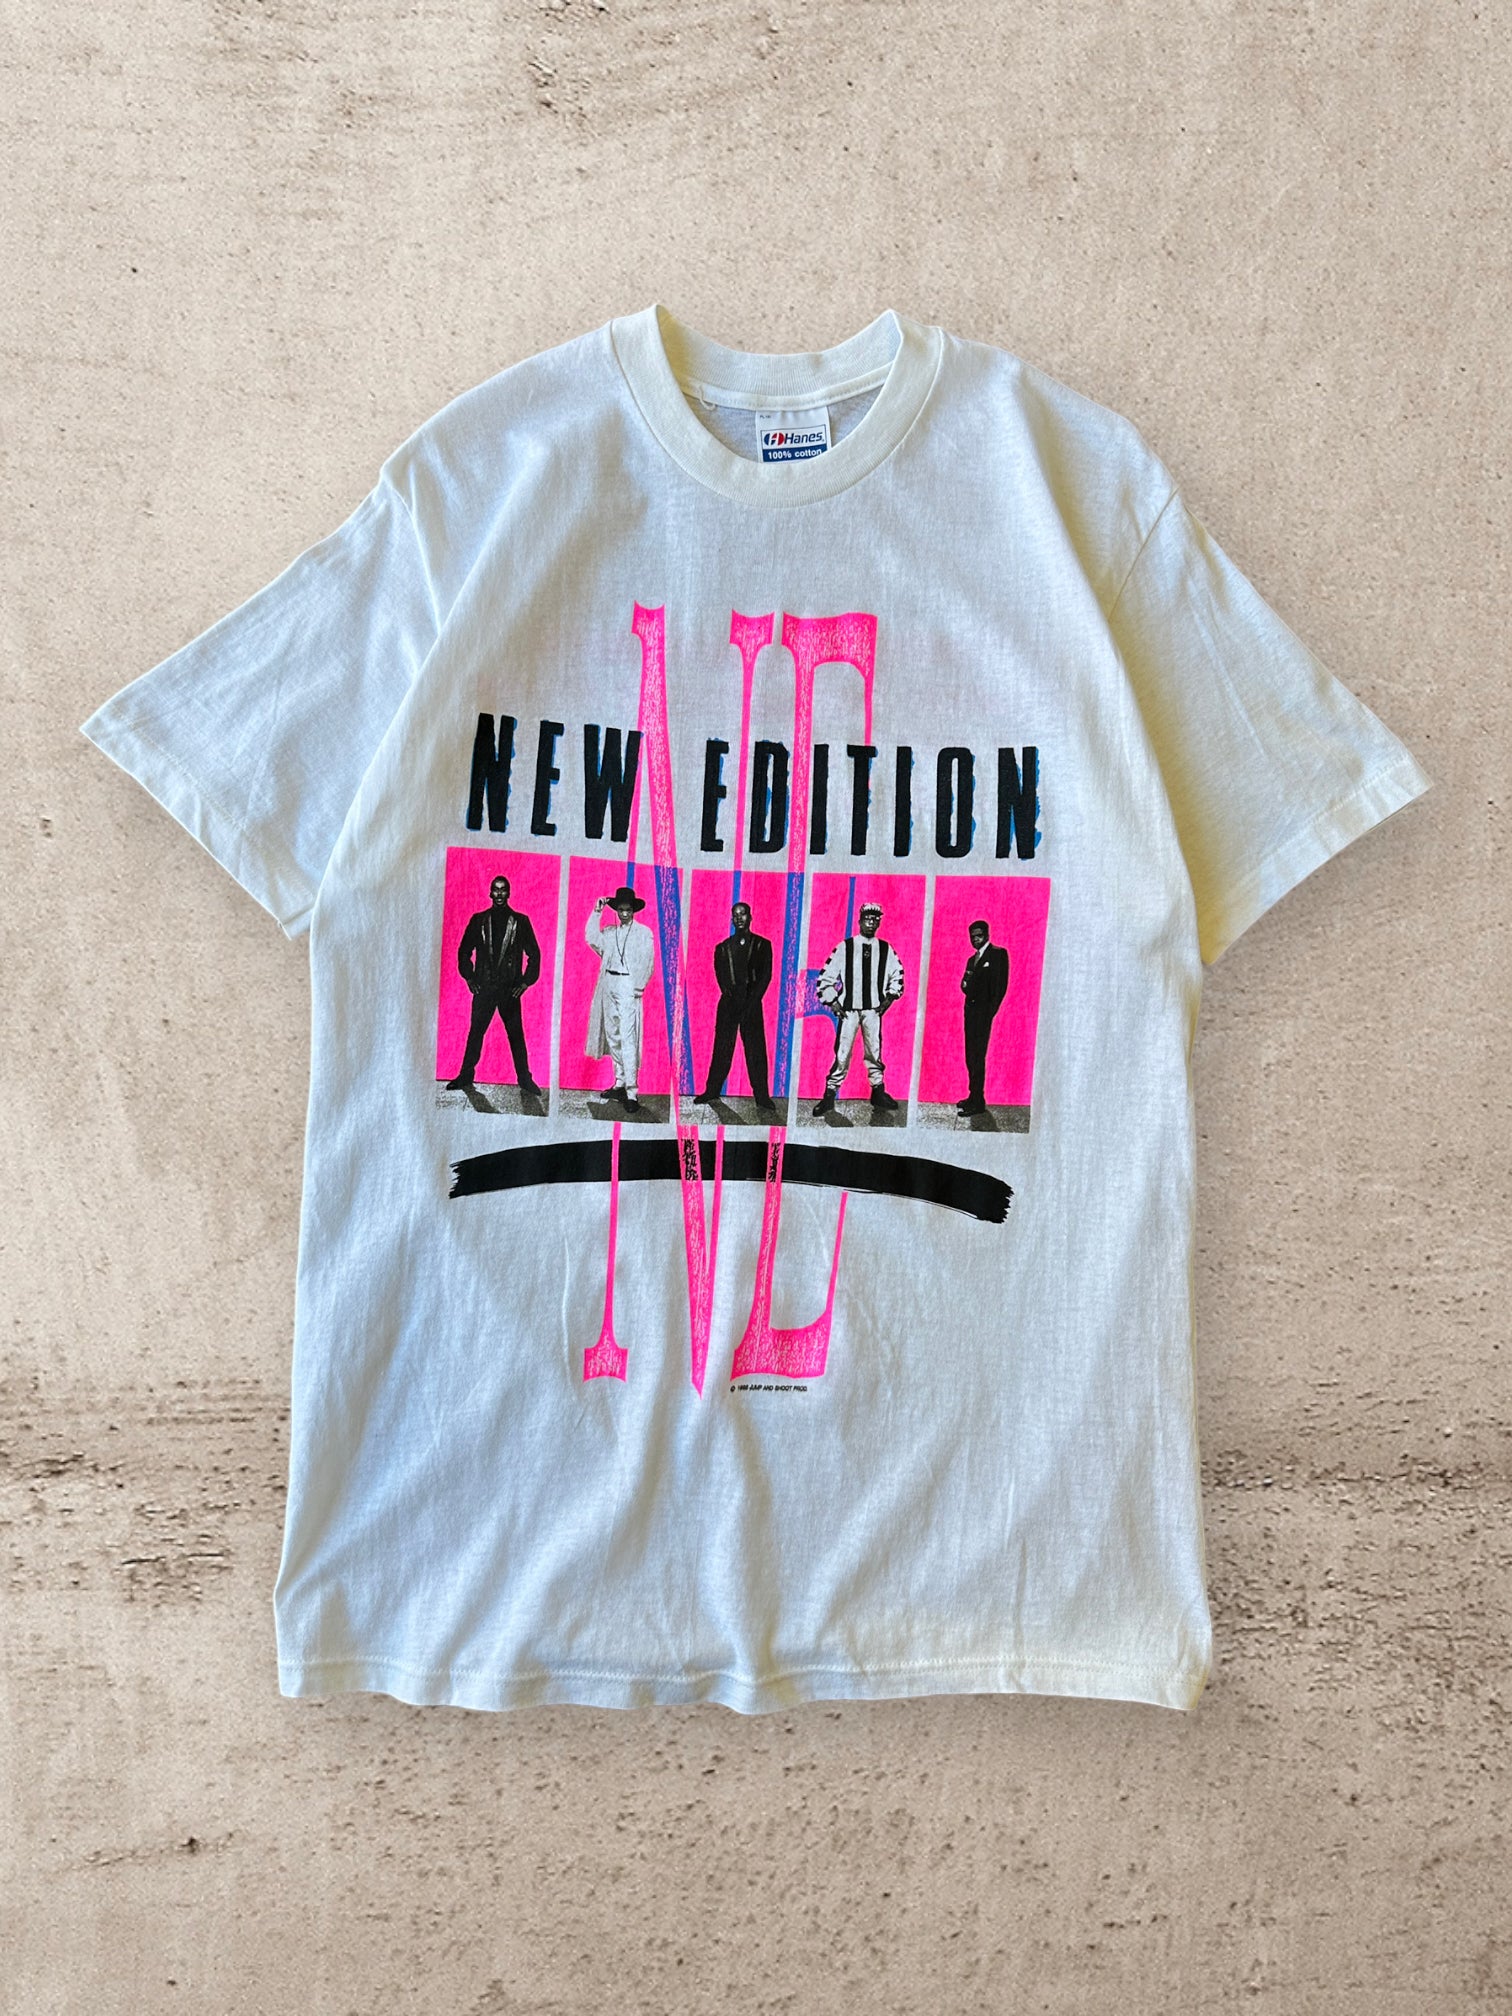 1988 New Edition Bobby Brown R&B T-Shirt - Medium